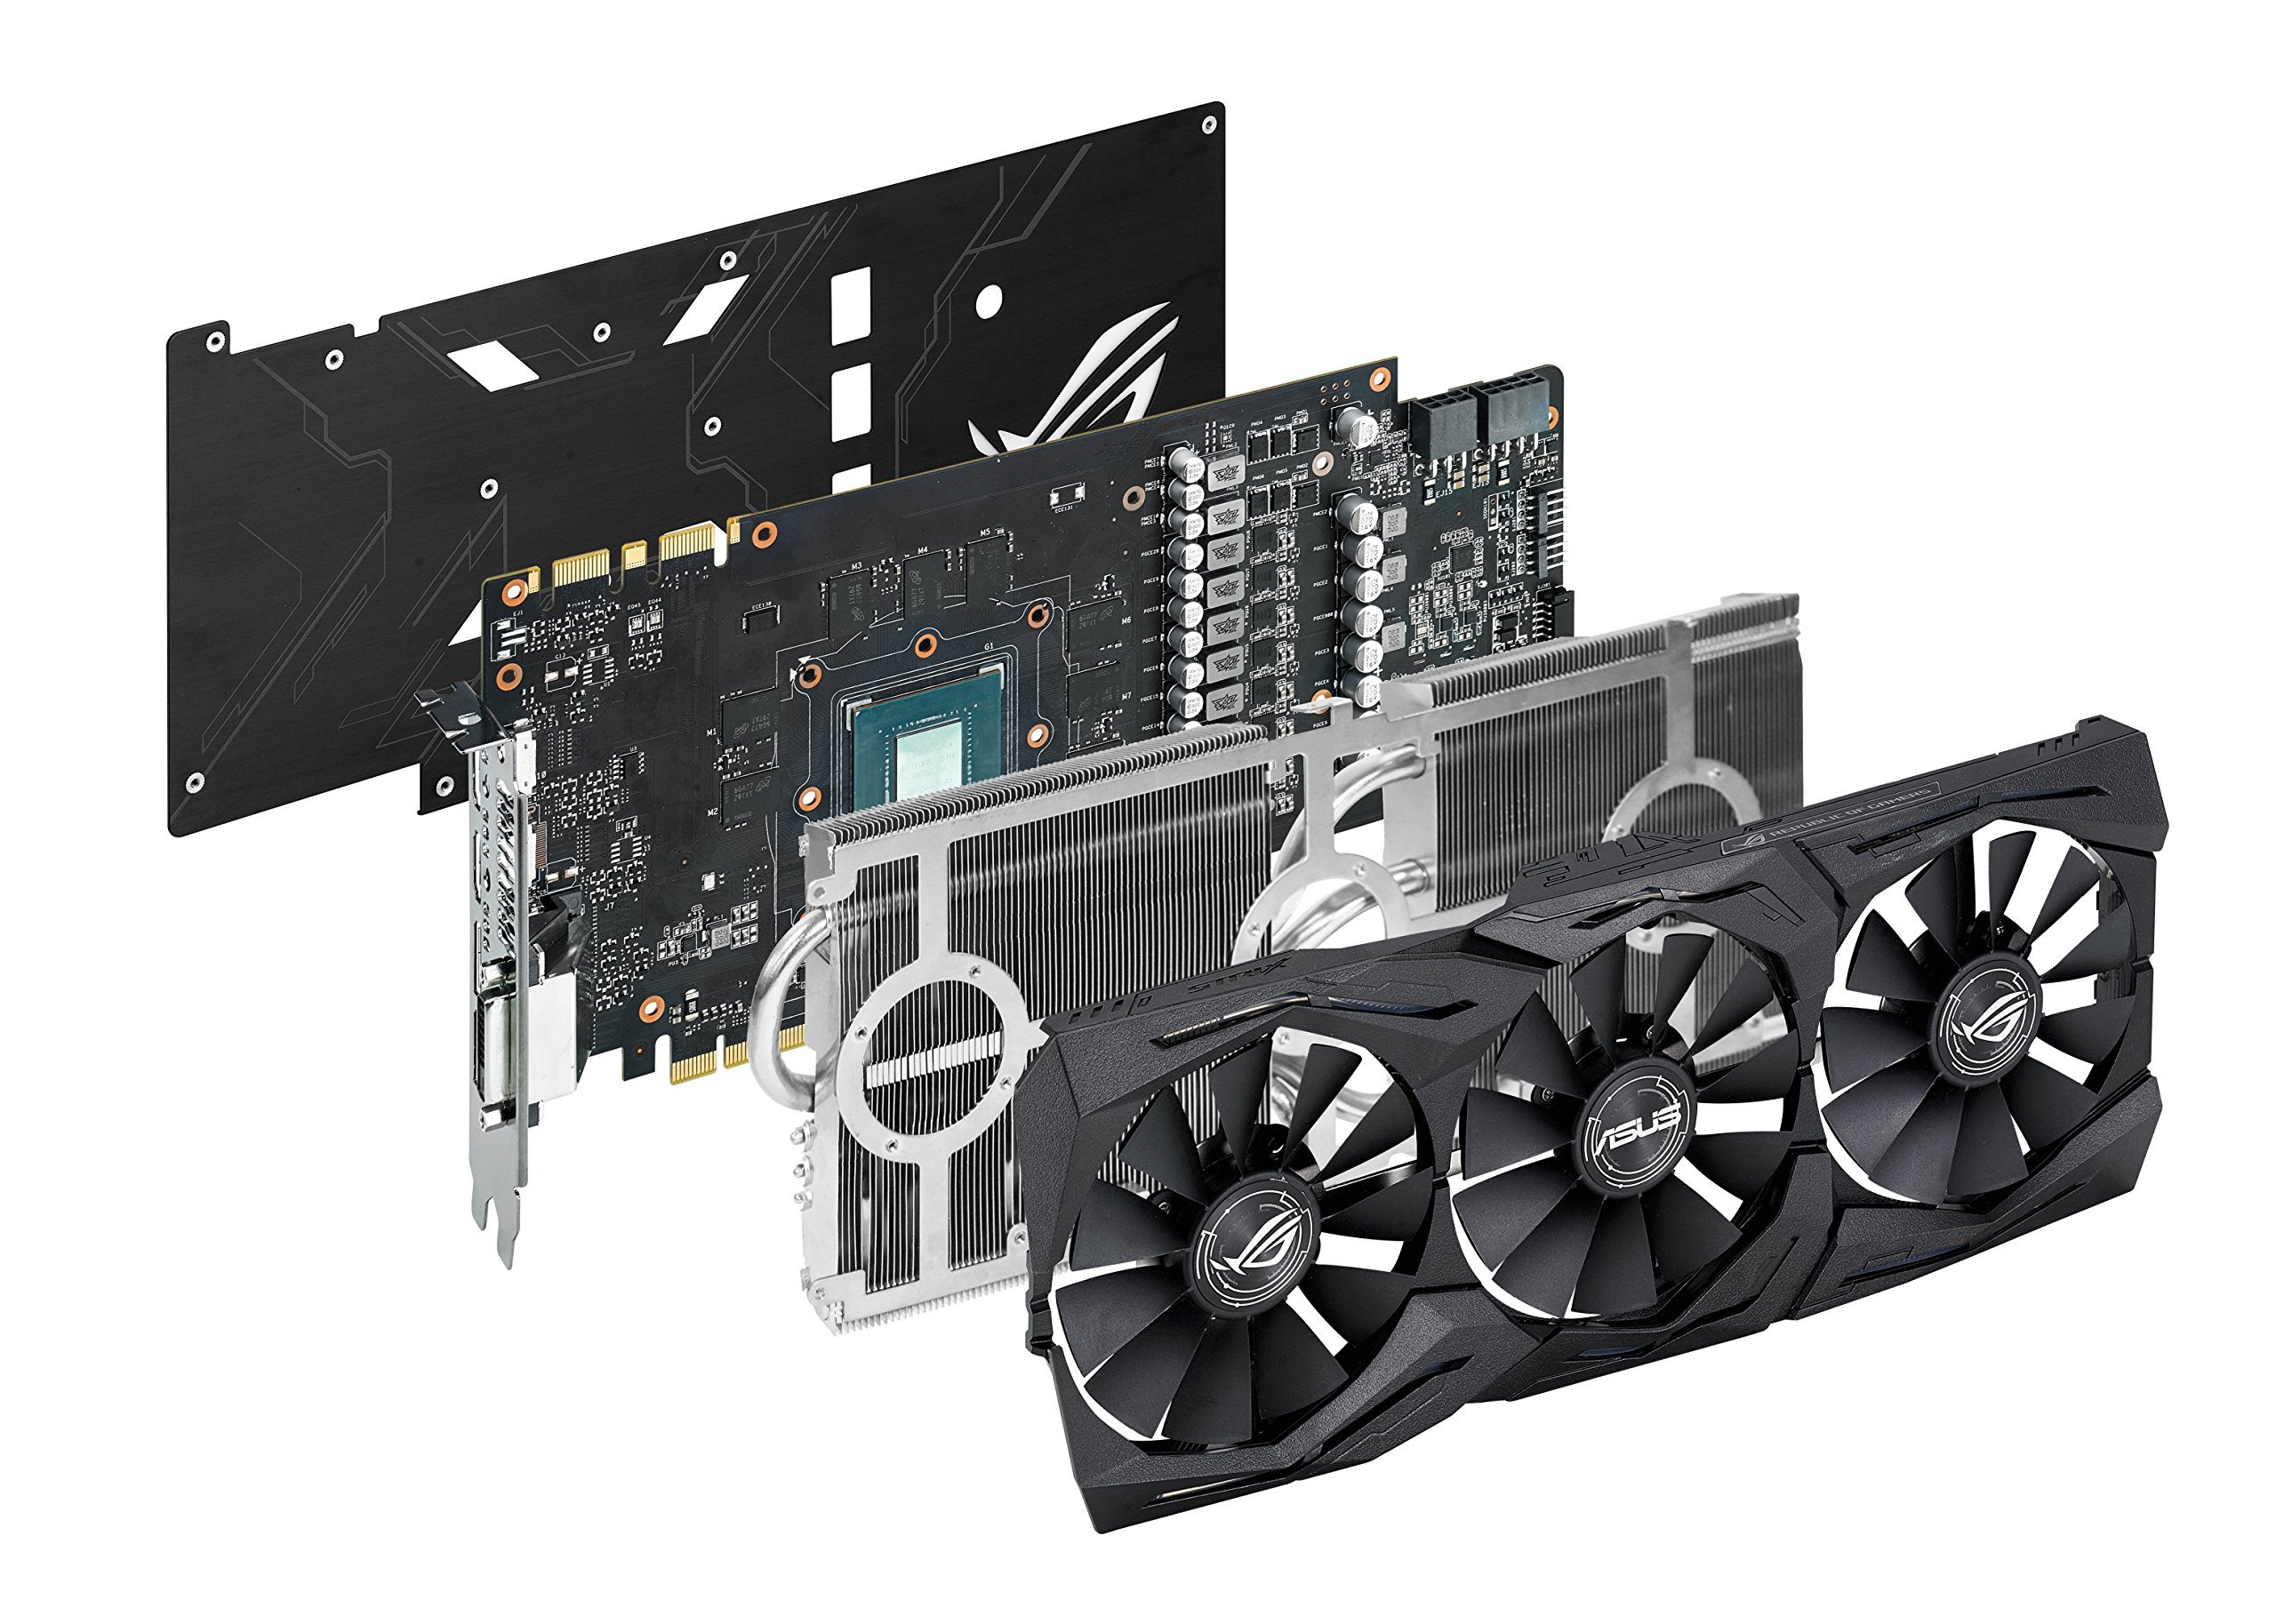 ASUS GeForce GTX 1080 8GB ROG Strix Graphics Card (STRIX-GTX1080-A8G-GAMING)